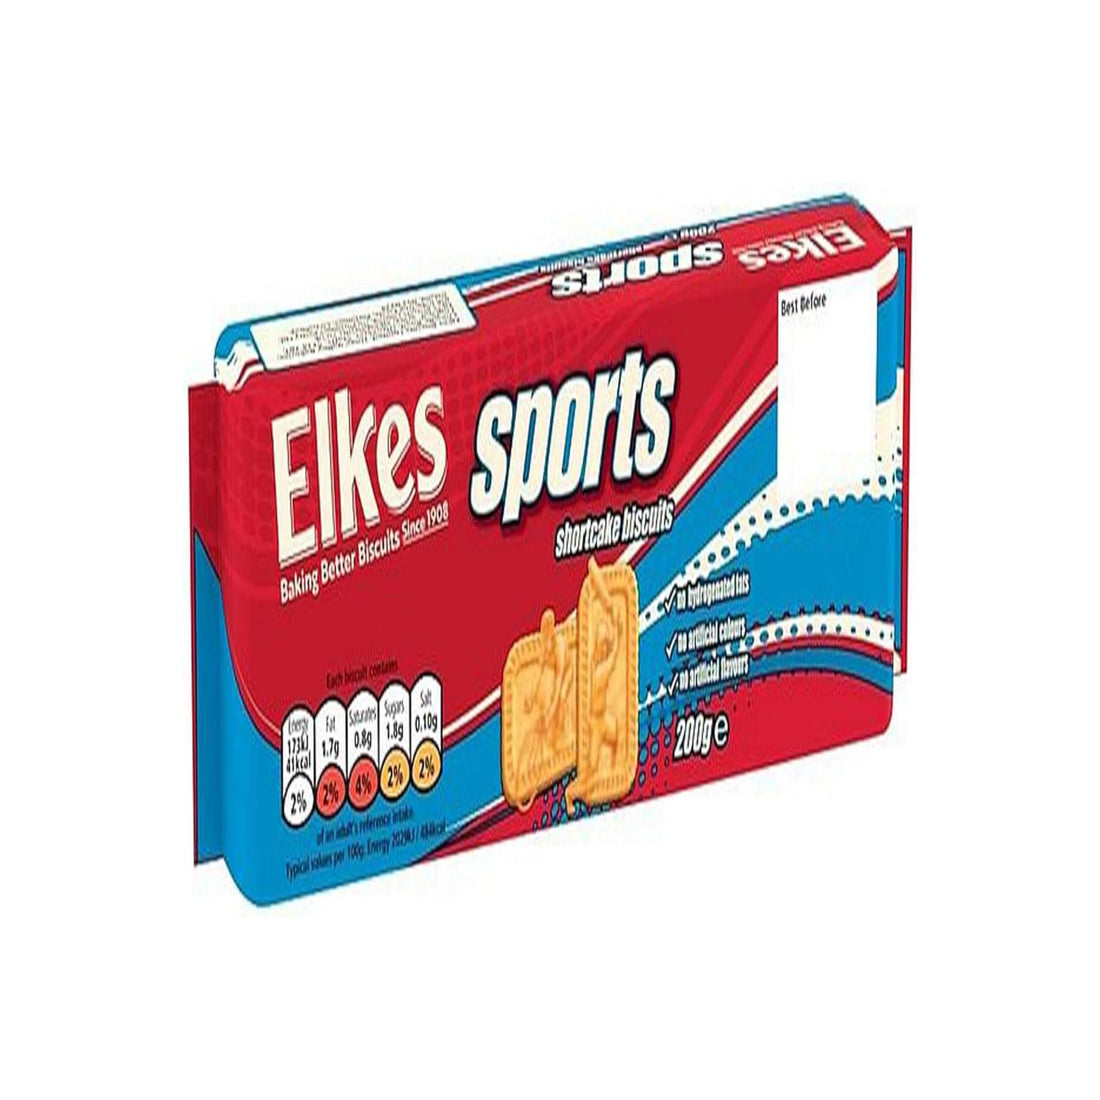 Elkes Sports Shortcake Biscuits 200g